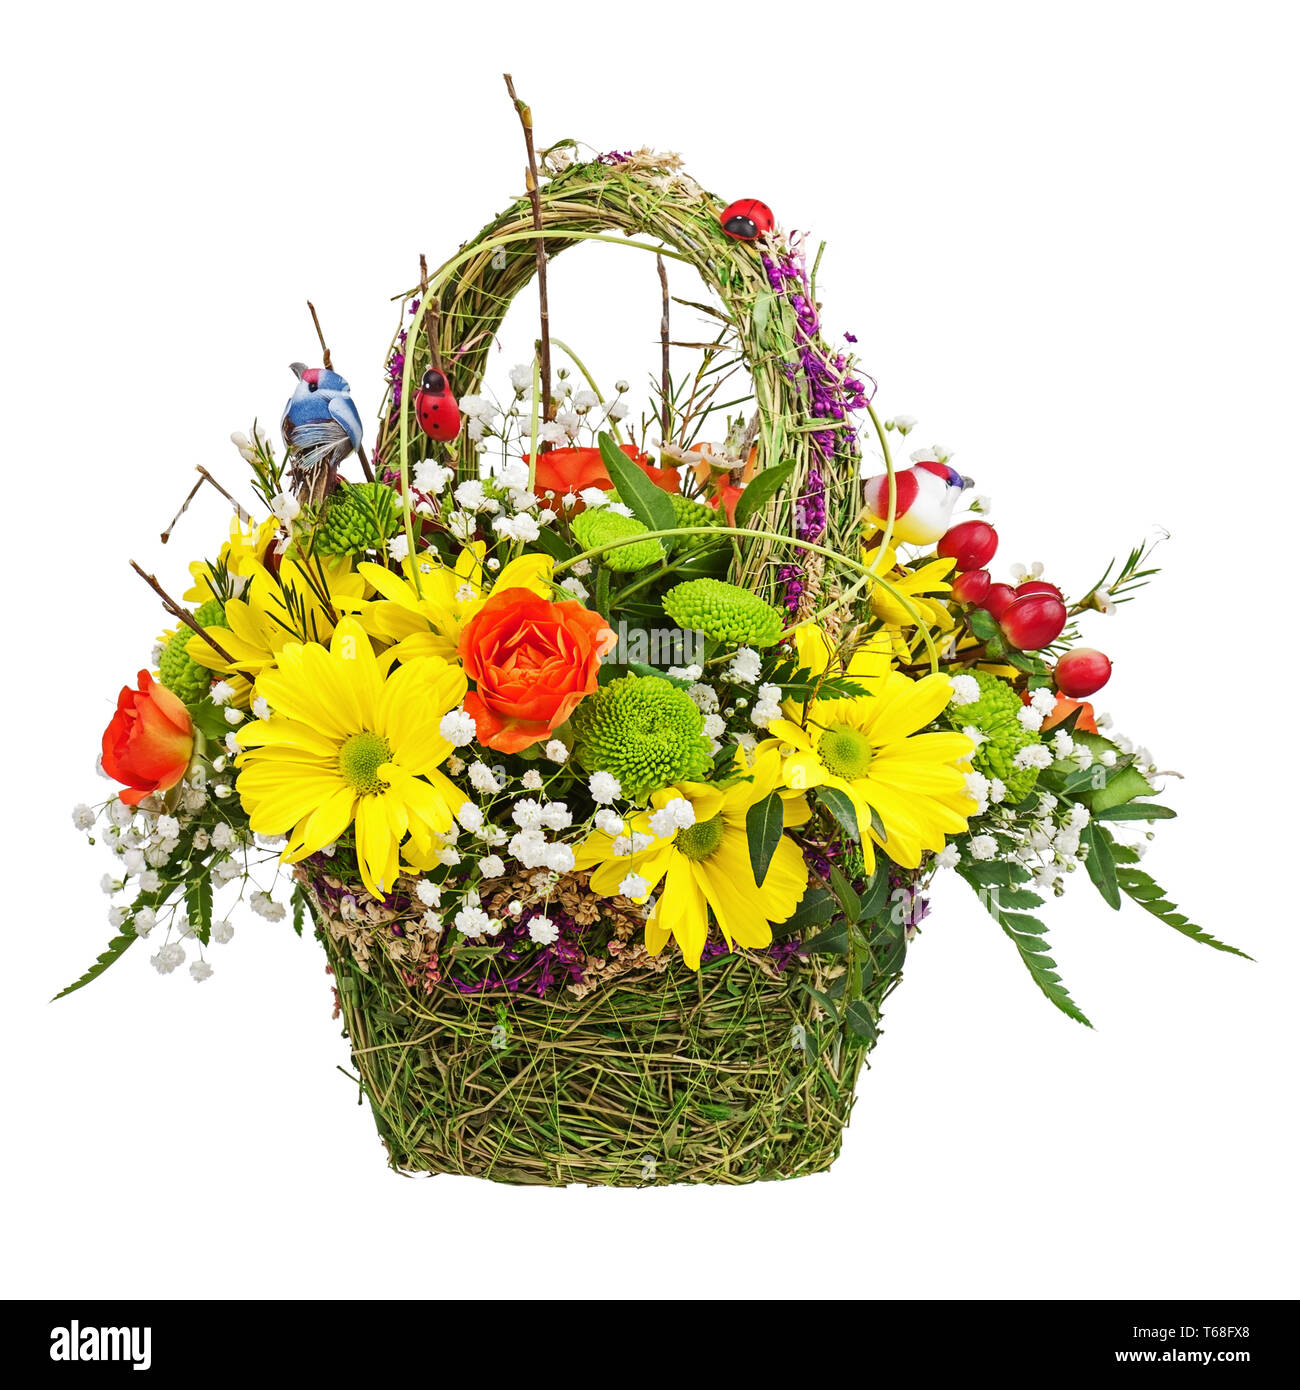 Flowers bouquet arrangement centerpiece in wicker basket. Stock Photo